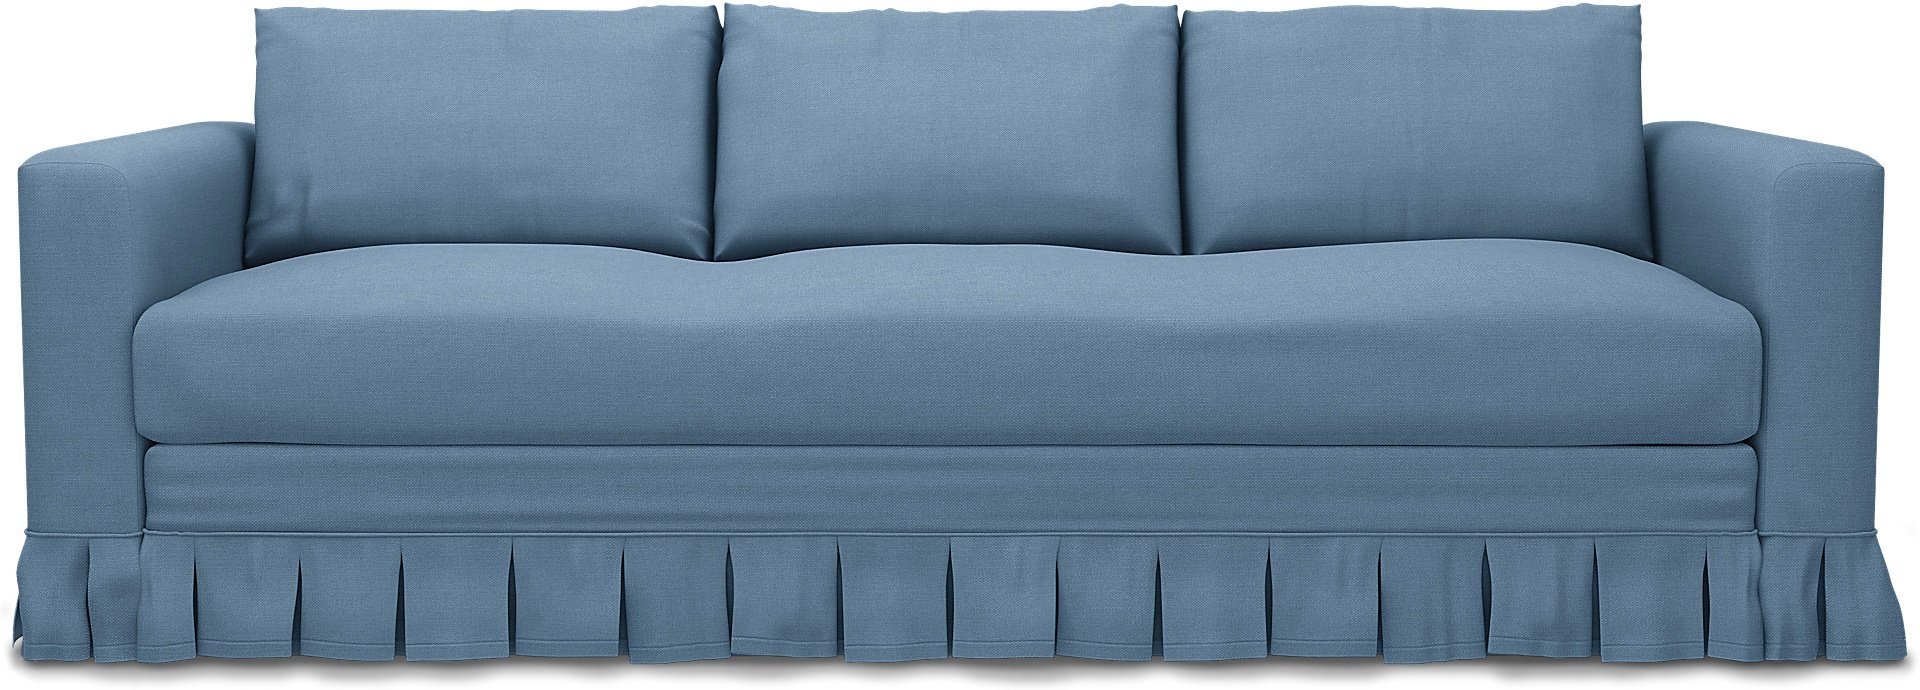 IKEA - Vimle 3 Seater Sofa Cover, Vintage Blue, Linen - Bemz